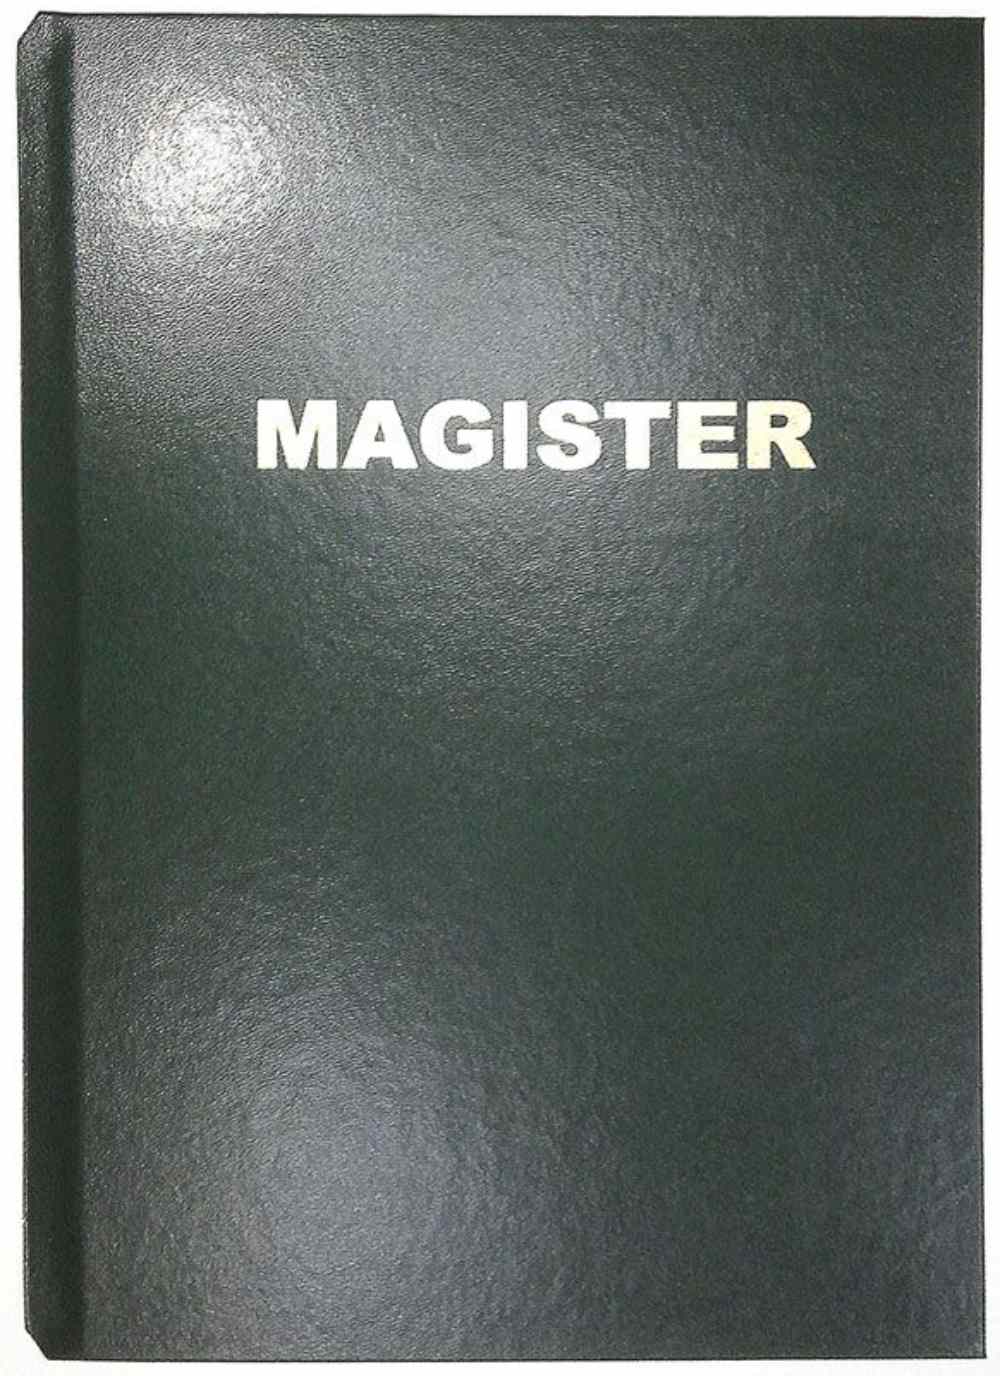 Твердые обложки для МеталБинд O.HARD COVER Magister А4, 304х212 мм с покрытием «кожа лайка» без окна, черные